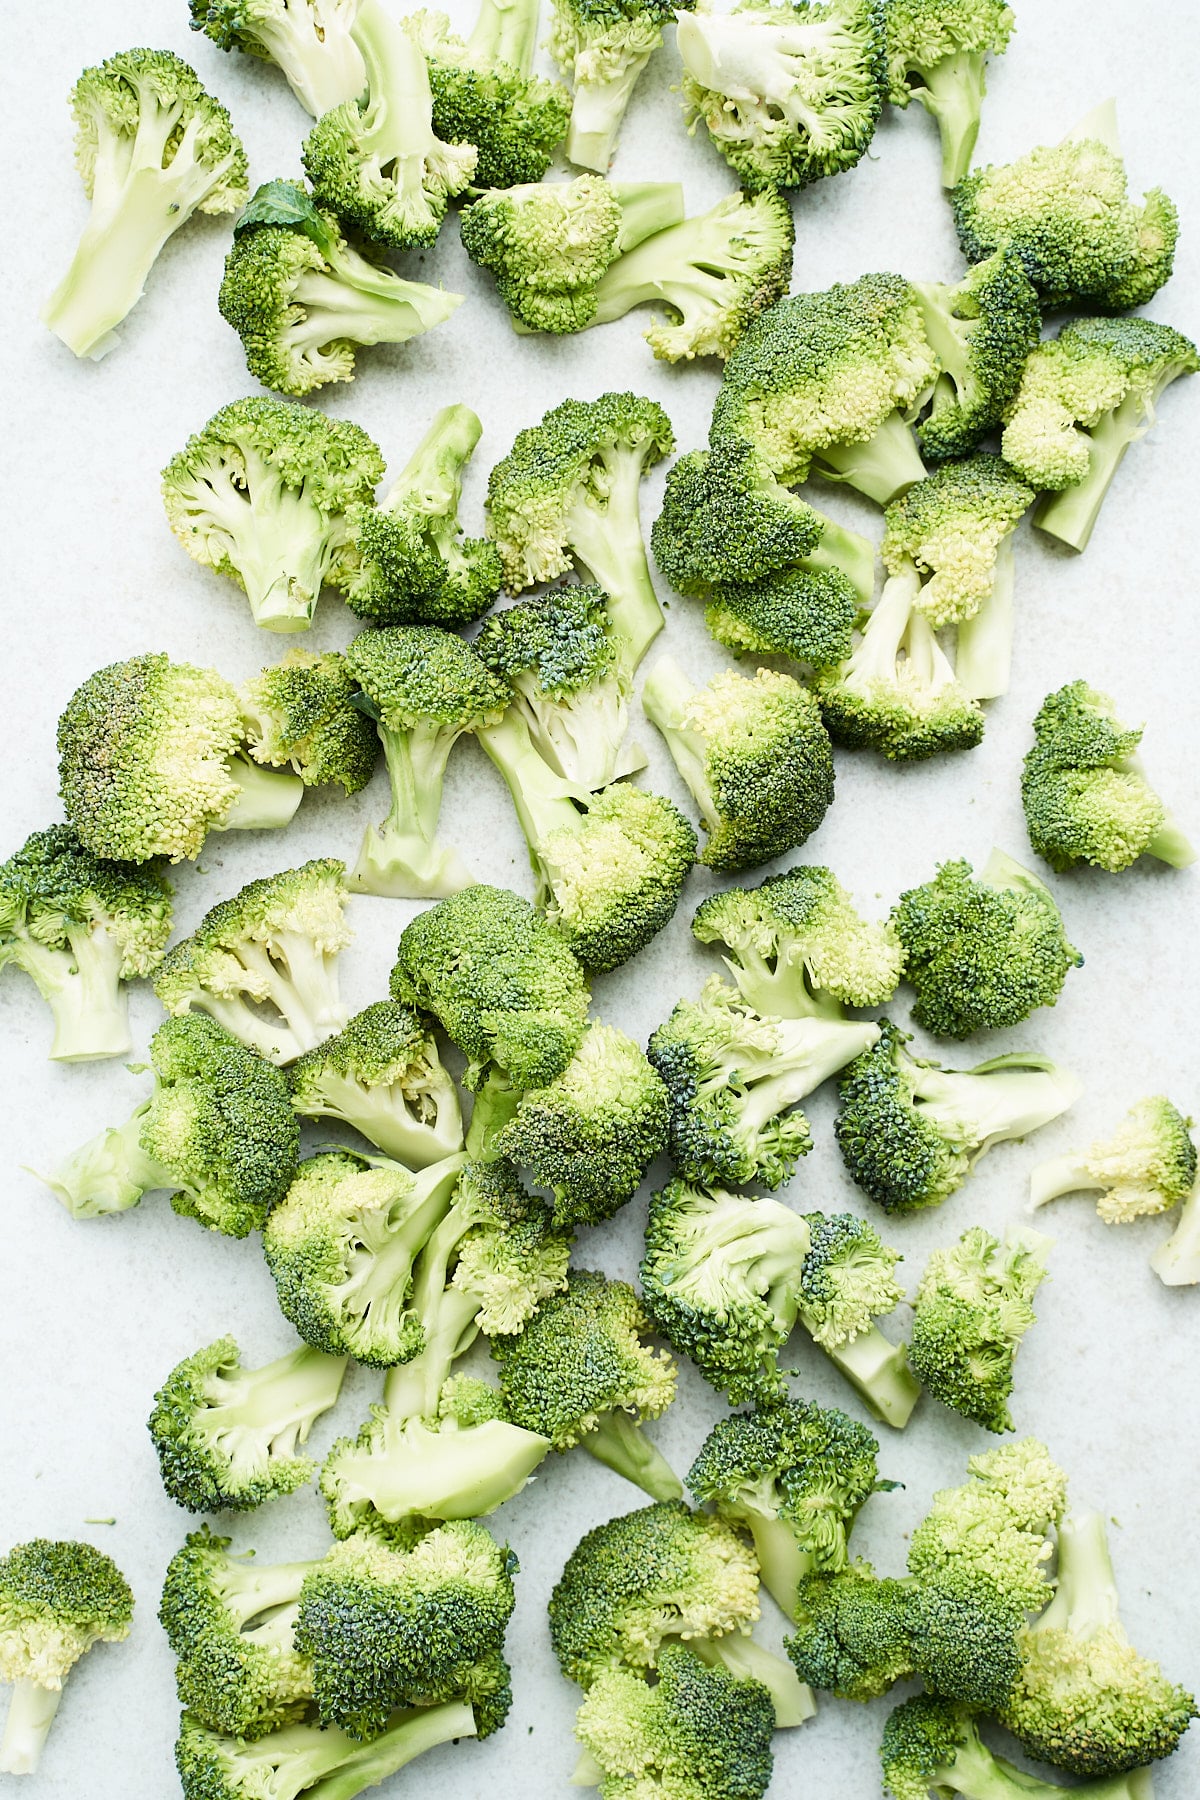 Frozen broccoli on a baking tray.